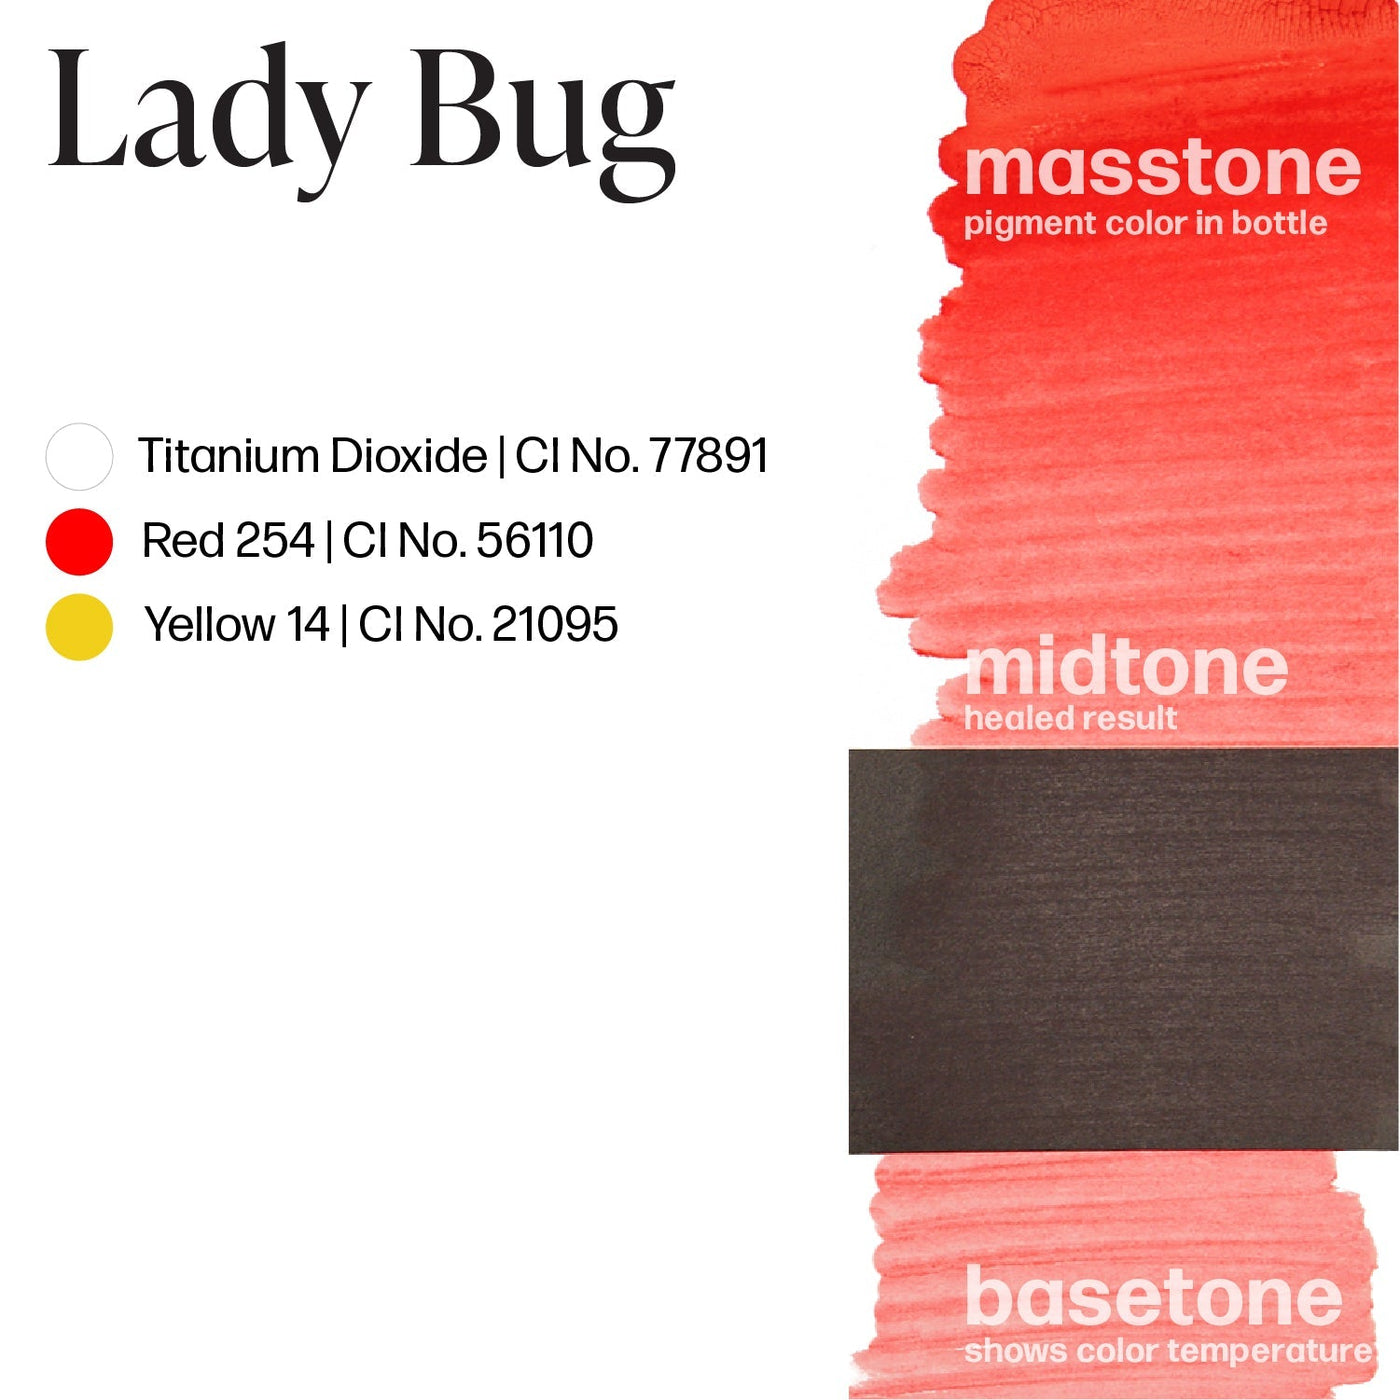 Perma Blend Sweet Lip Lady Bug - PMU Pigments - Mithra Tattoo Supplies Canada